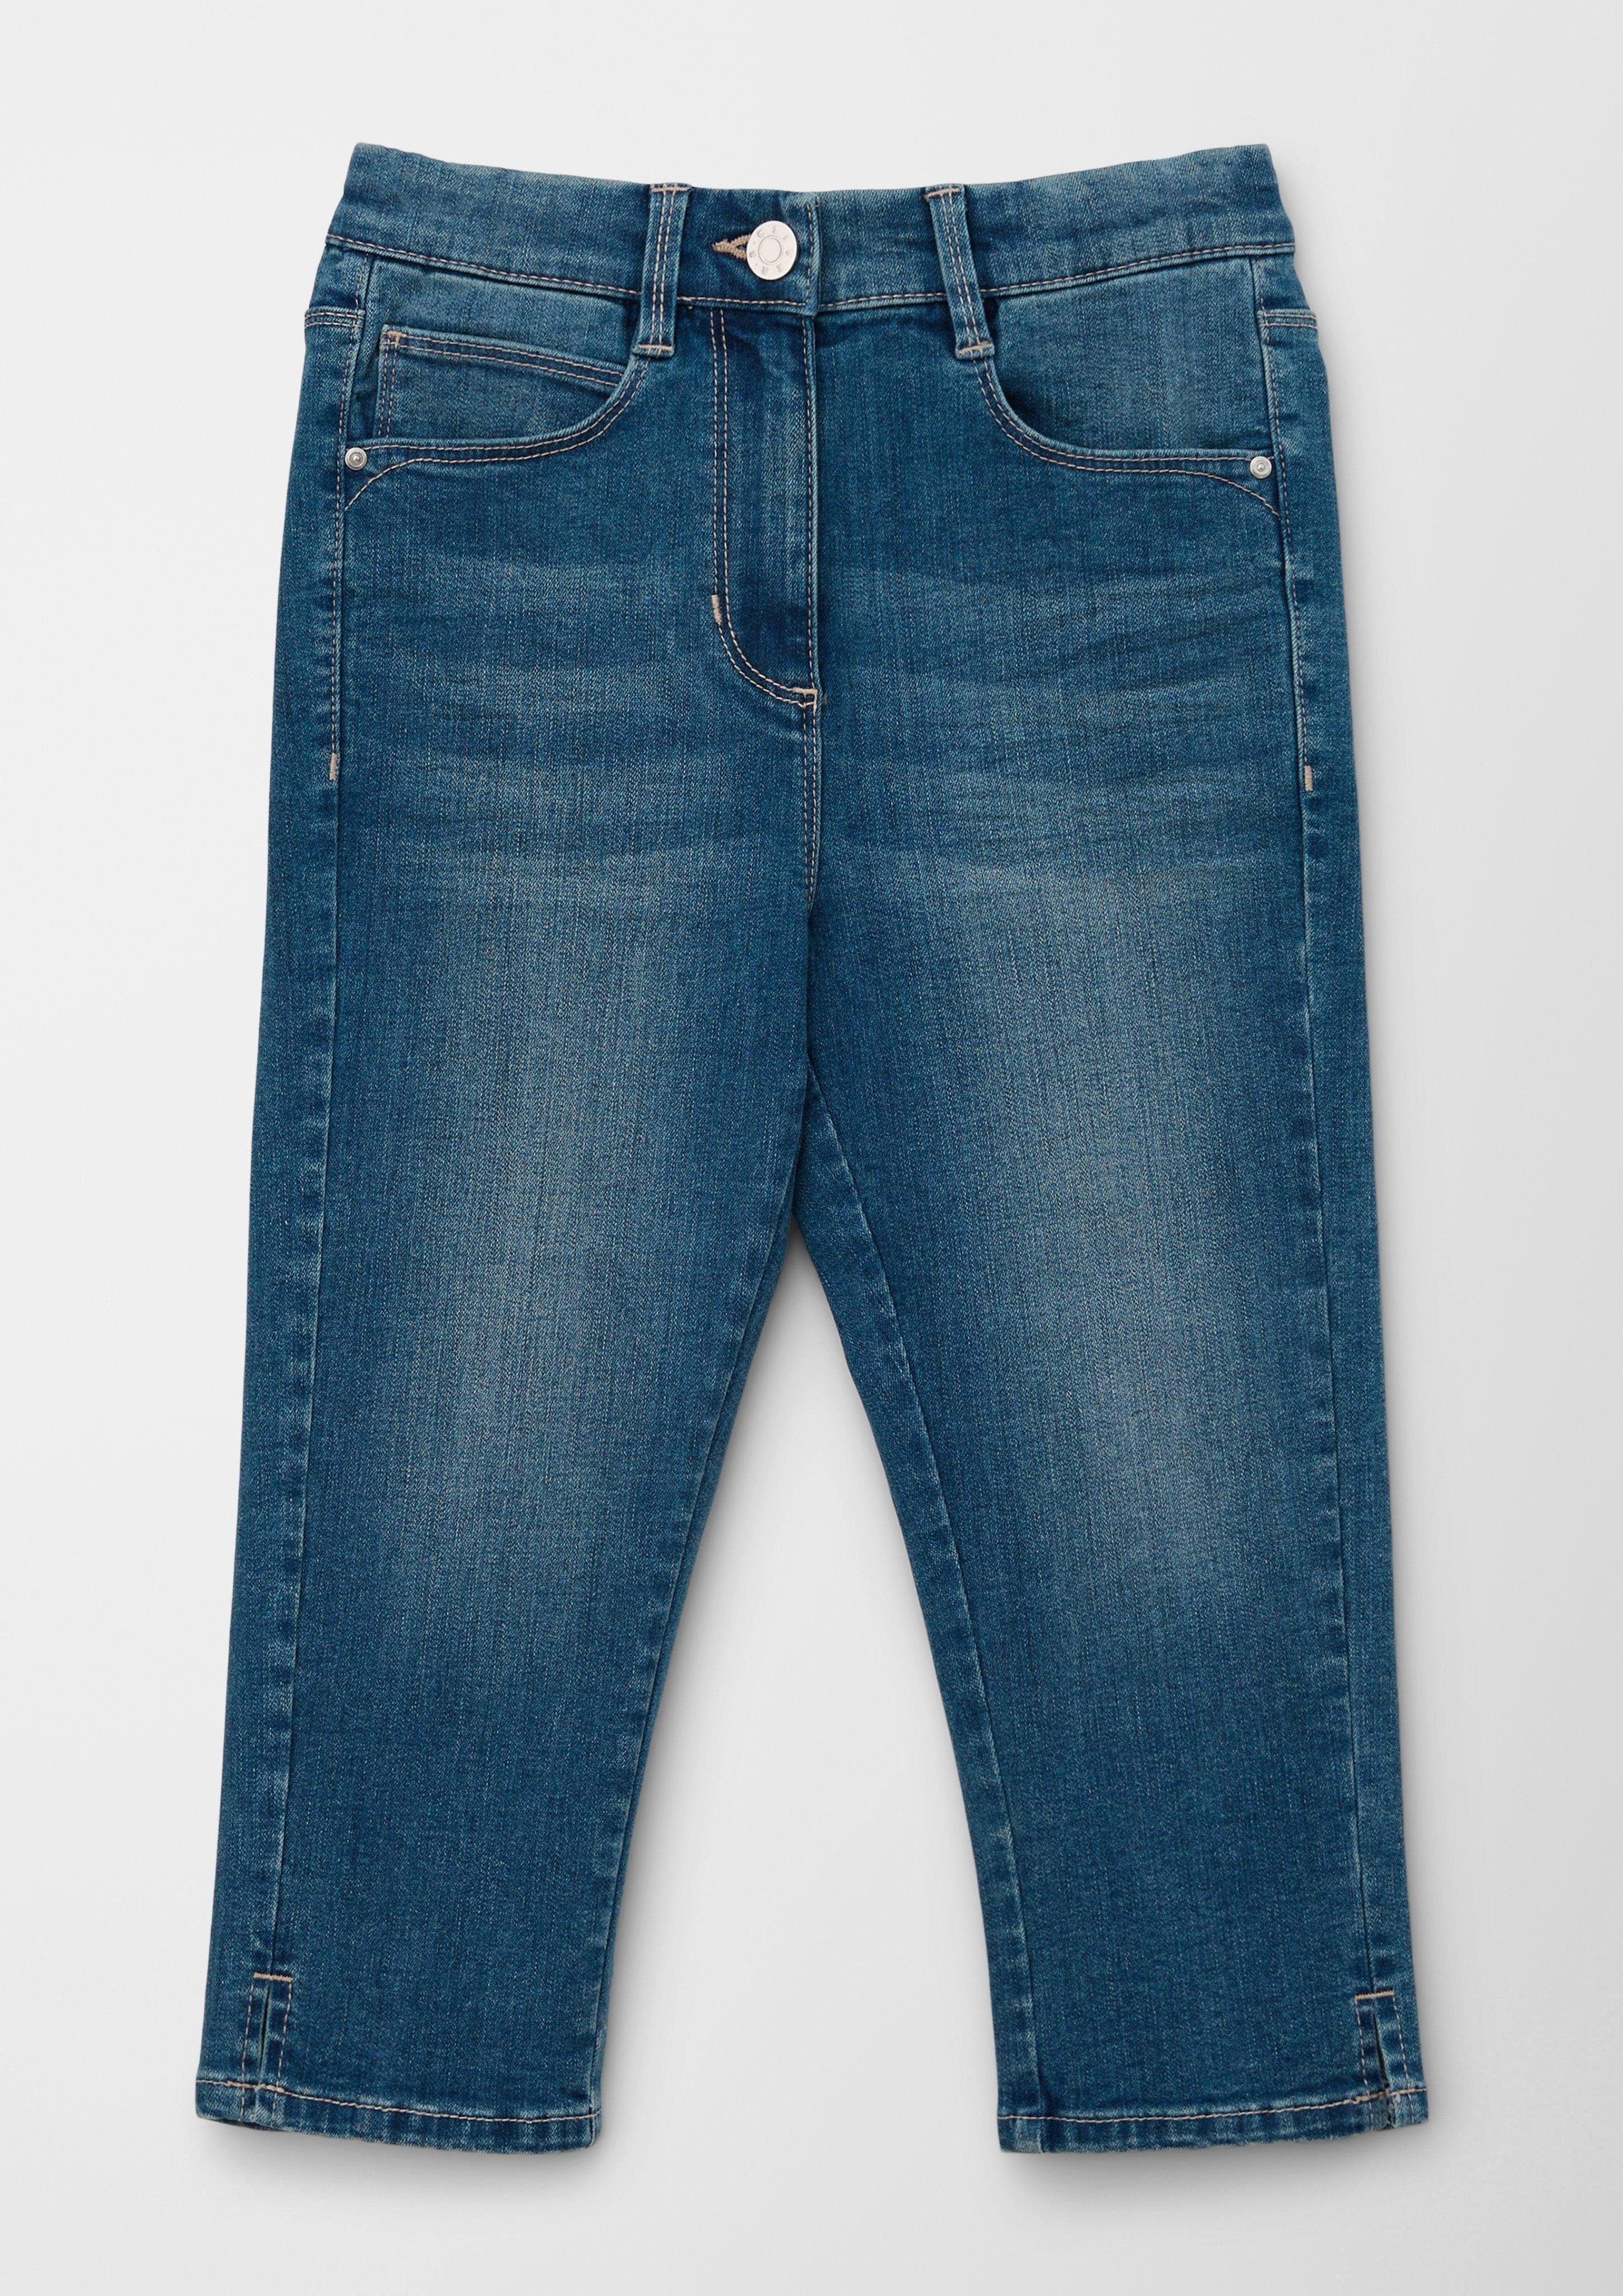 Skinny Skinny Skinny s.Oliver Rise Suri / 3/4-Hose High Waschung / / Leg Fit Capri-Jeans